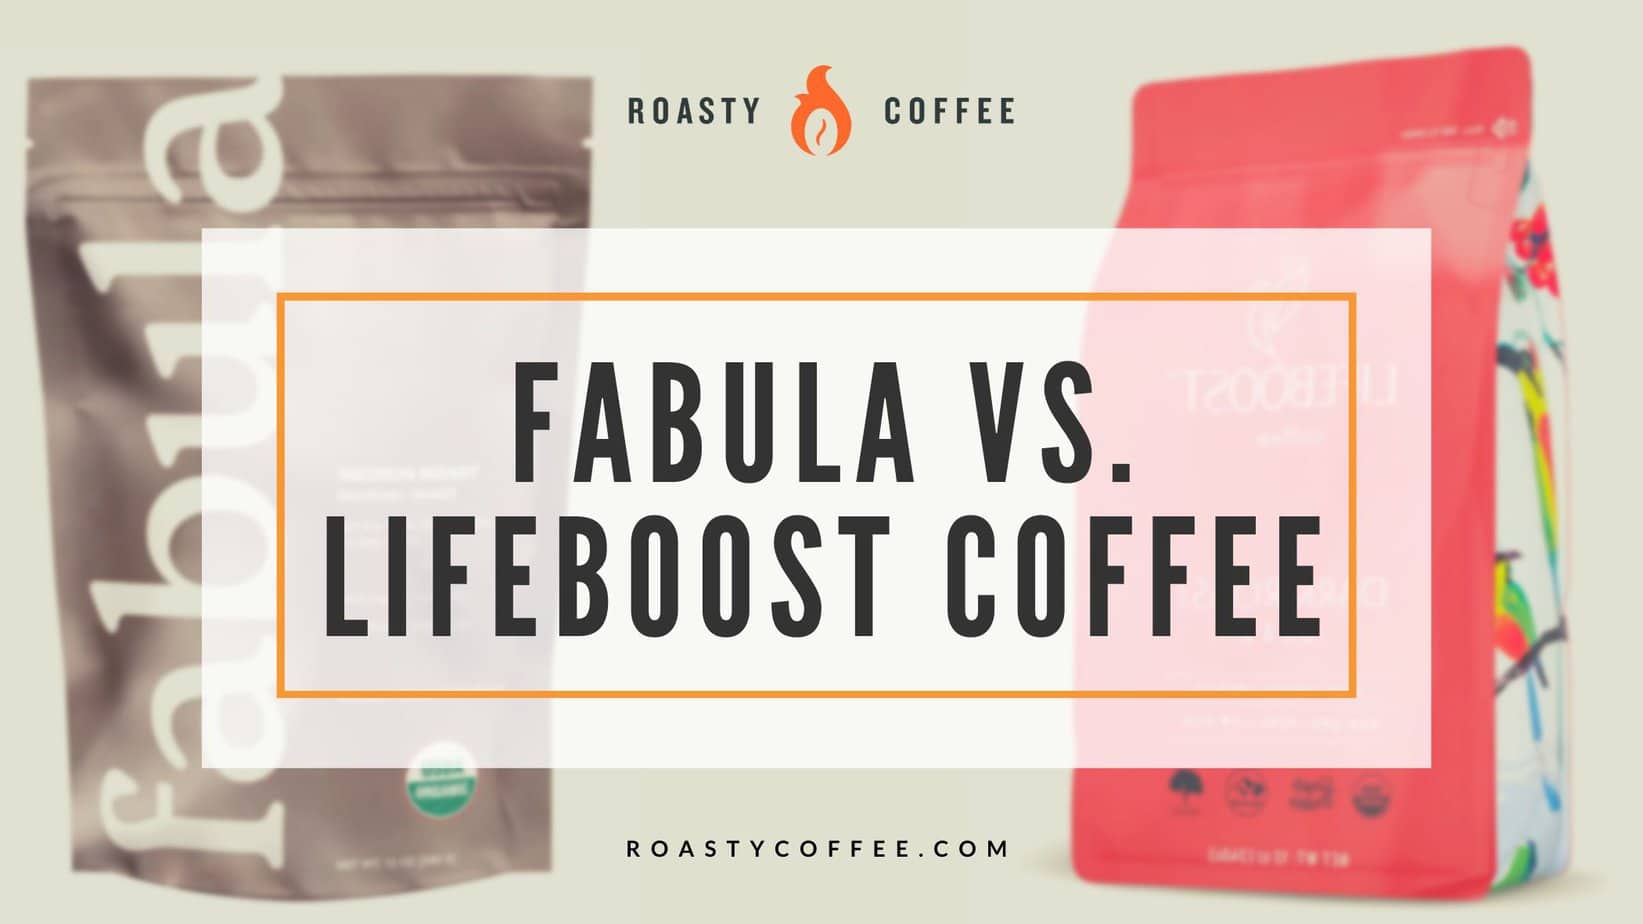 Fabula vs Lifeboost Coffee